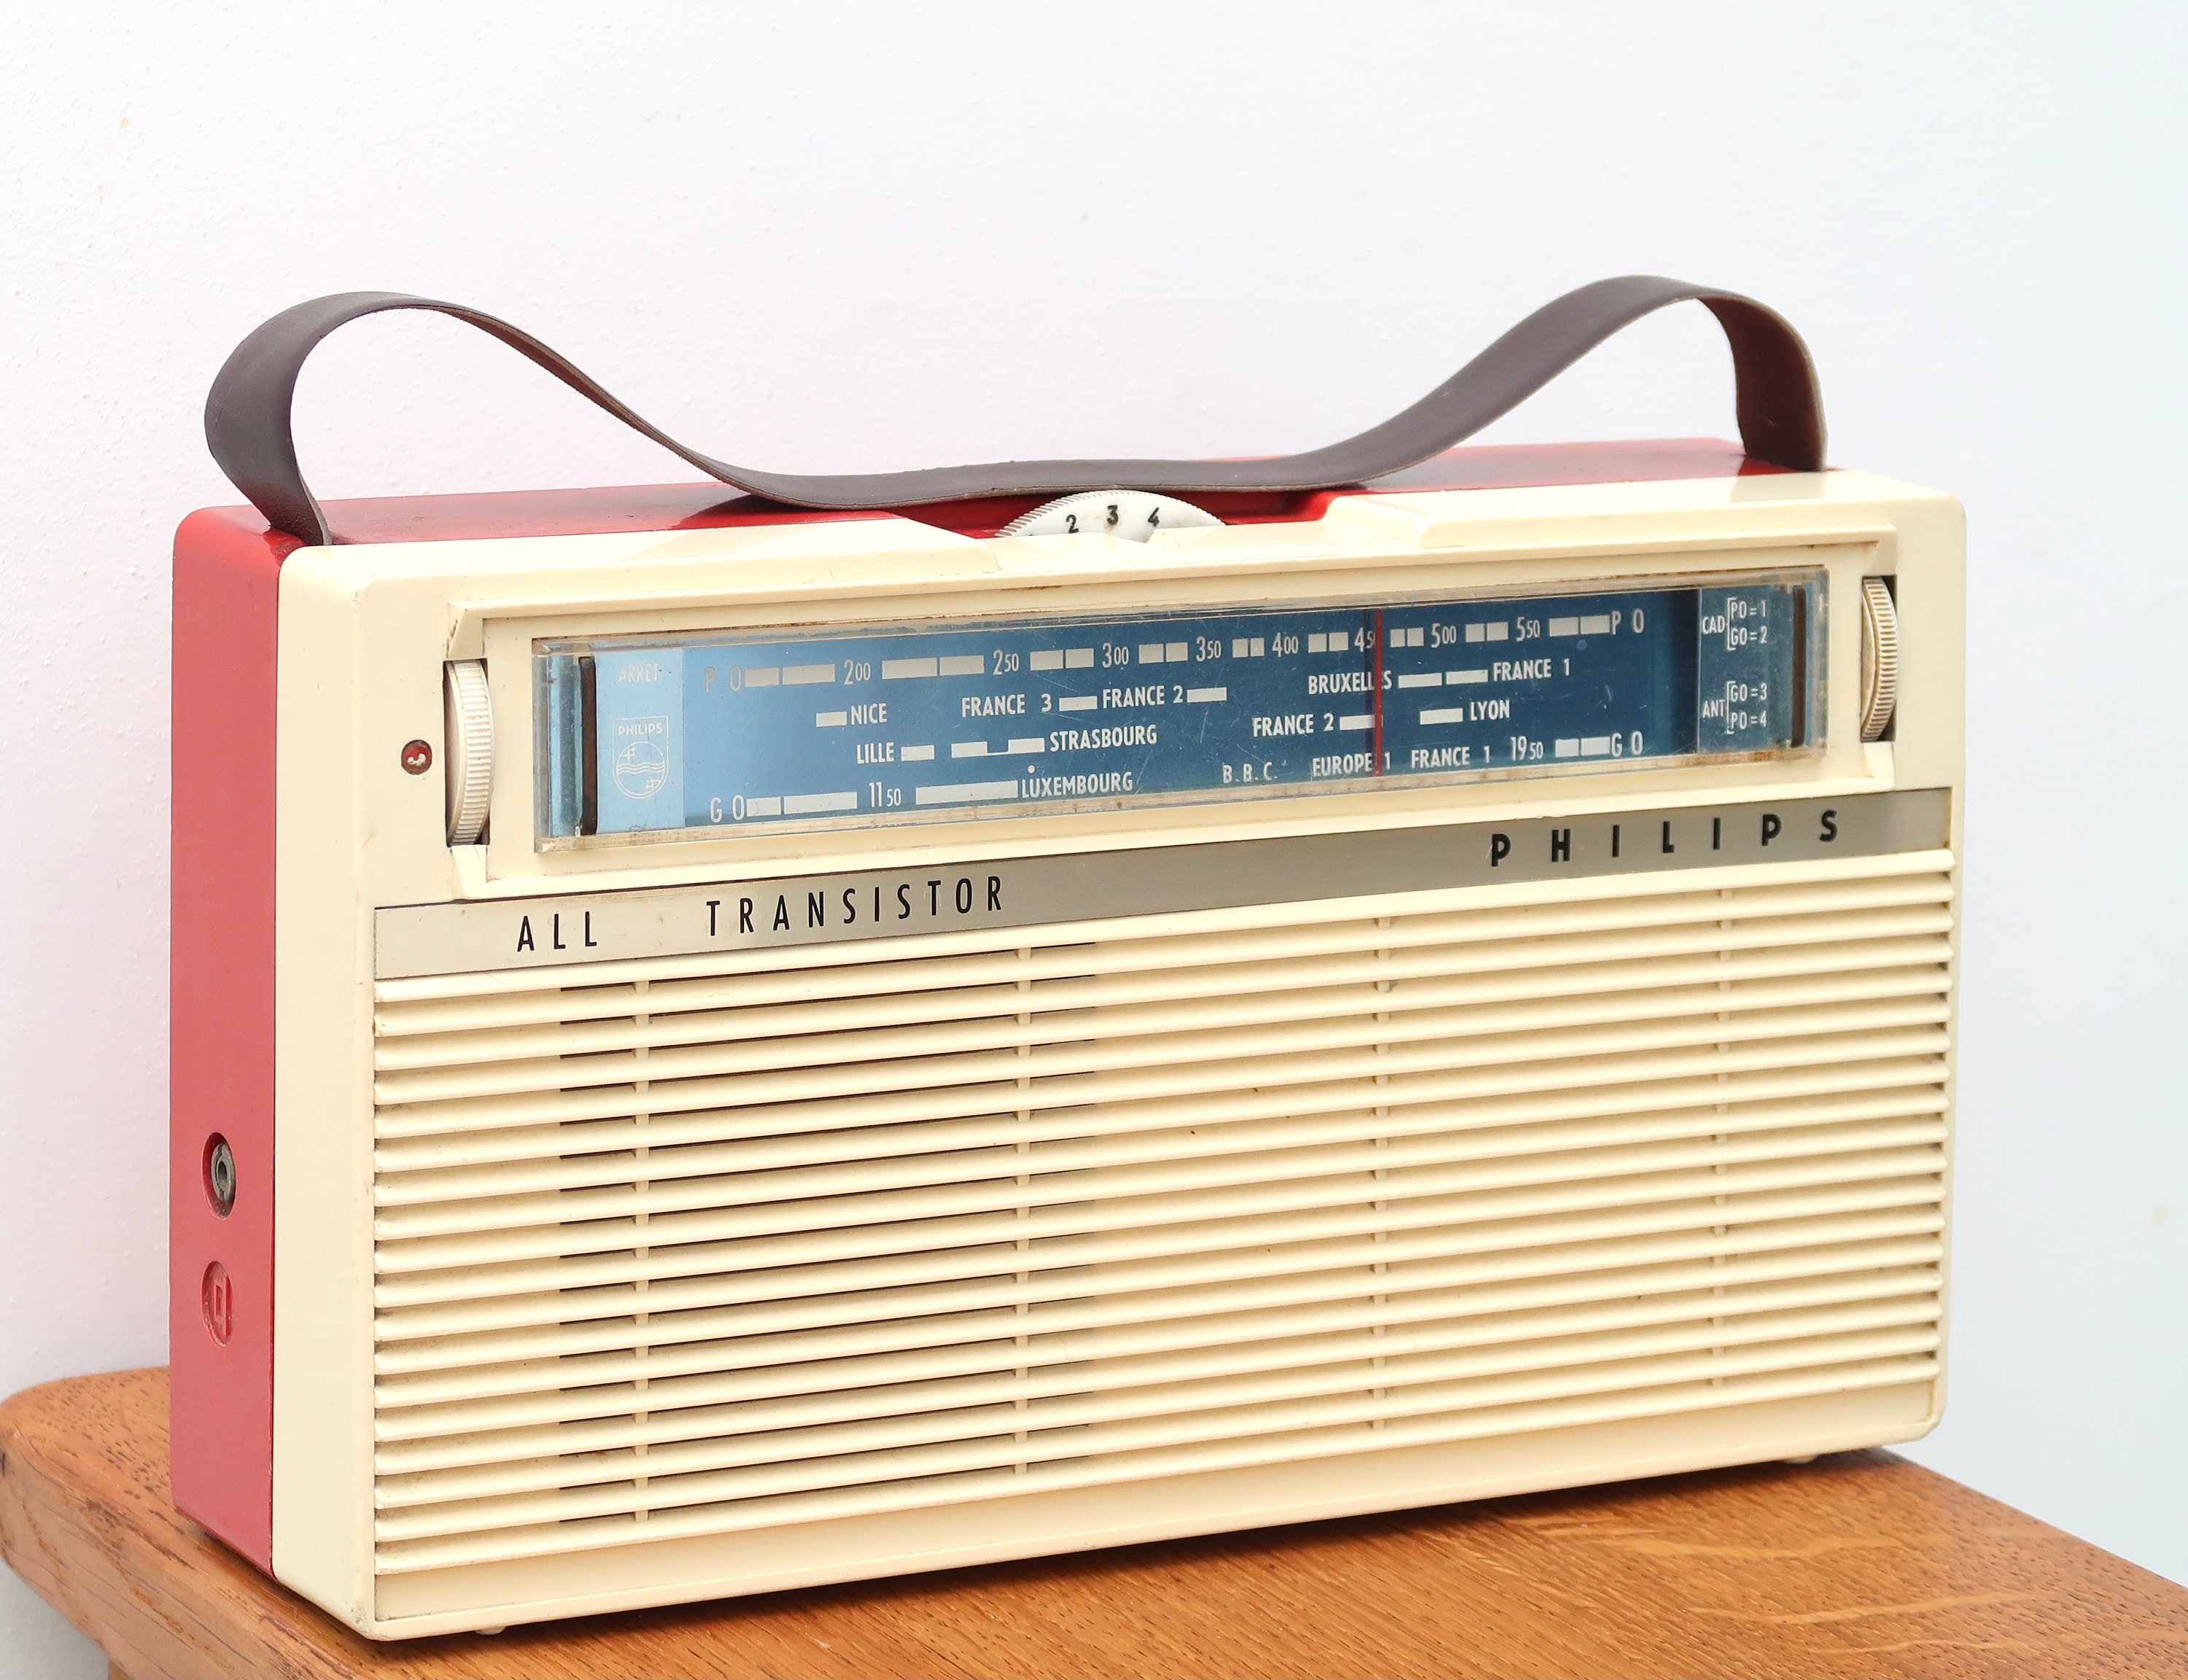 Philips All Transistor Radio, 1970s / Red, Beige, Vintage 